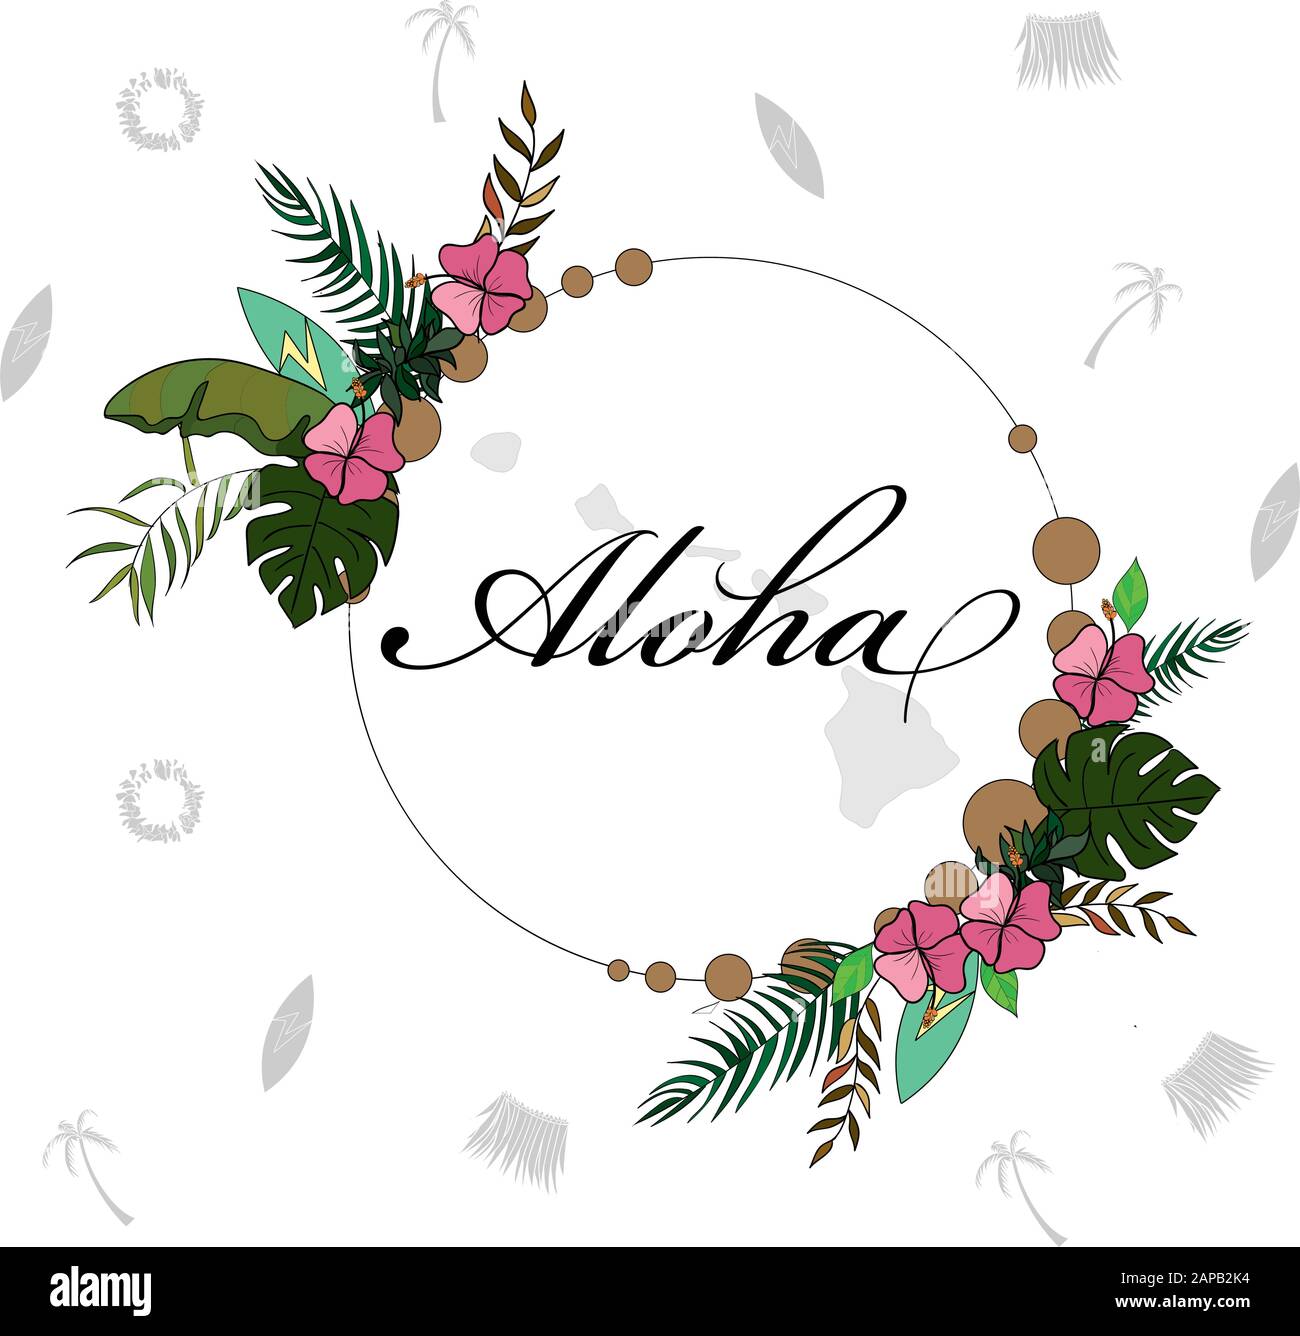 Platzierungsmuster im Thema "Aloha huwaii" Stock Vektor